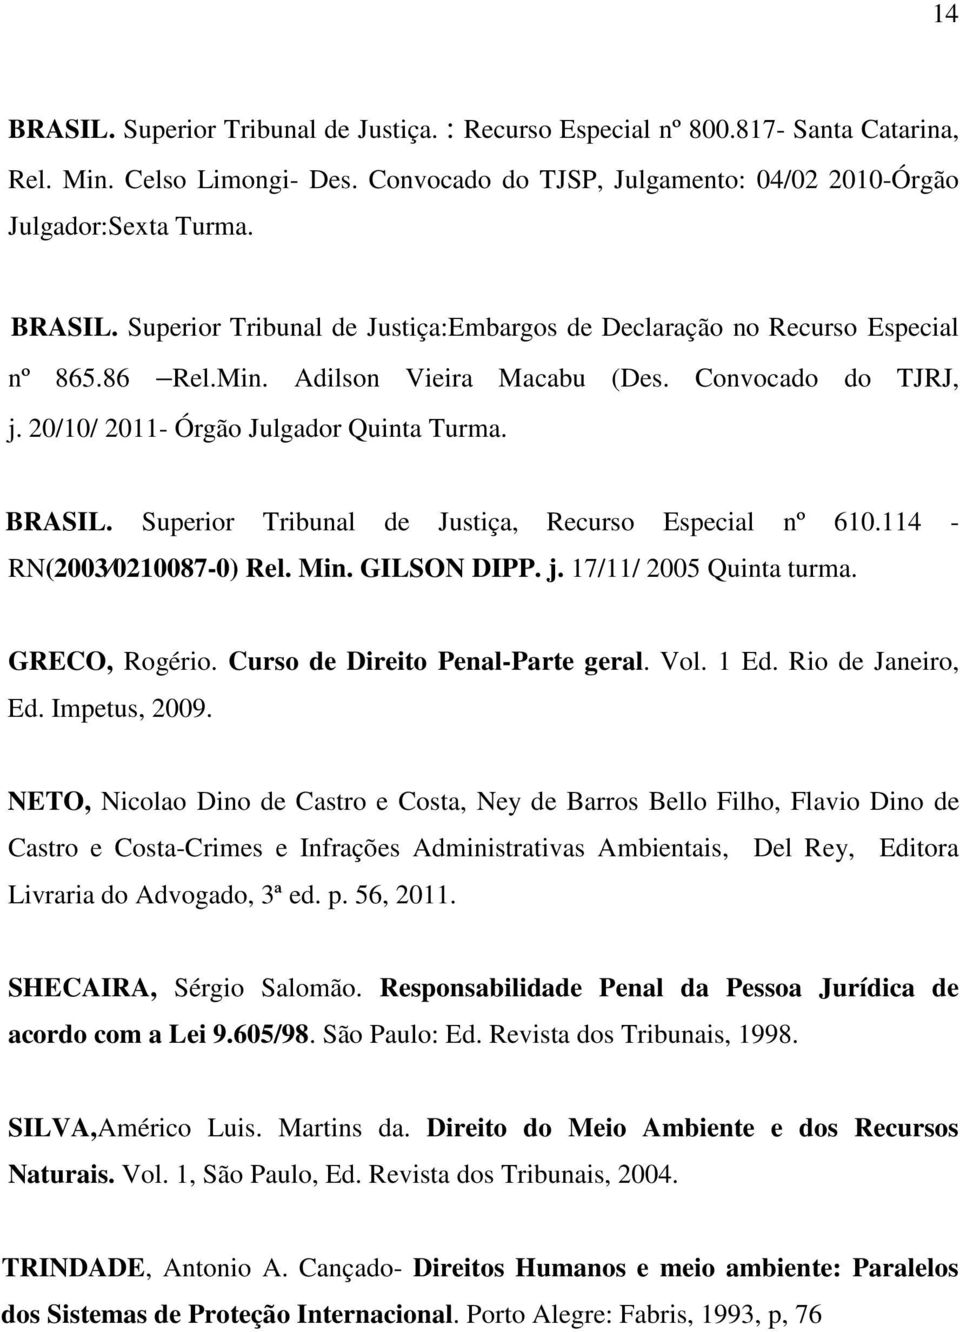 GILSON DIPP. j. 17/11/ 2005 Quinta turma. GRECO, Rogério. Curso de Direito Penal-Parte geral. Vol. 1 Ed. Rio de Janeiro, Ed. Impetus, 2009.